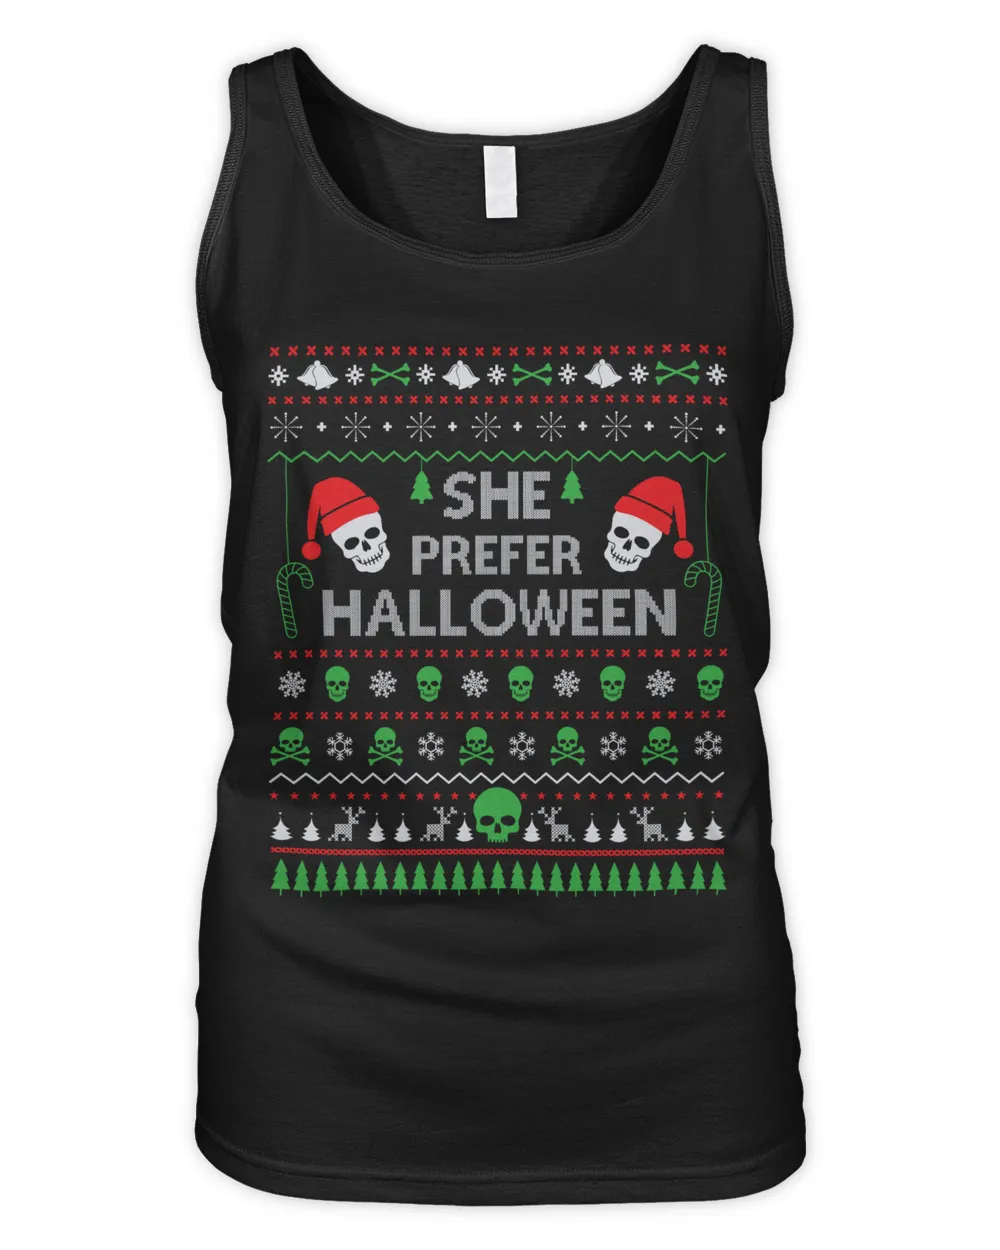 She prefer halloween christmas sweater